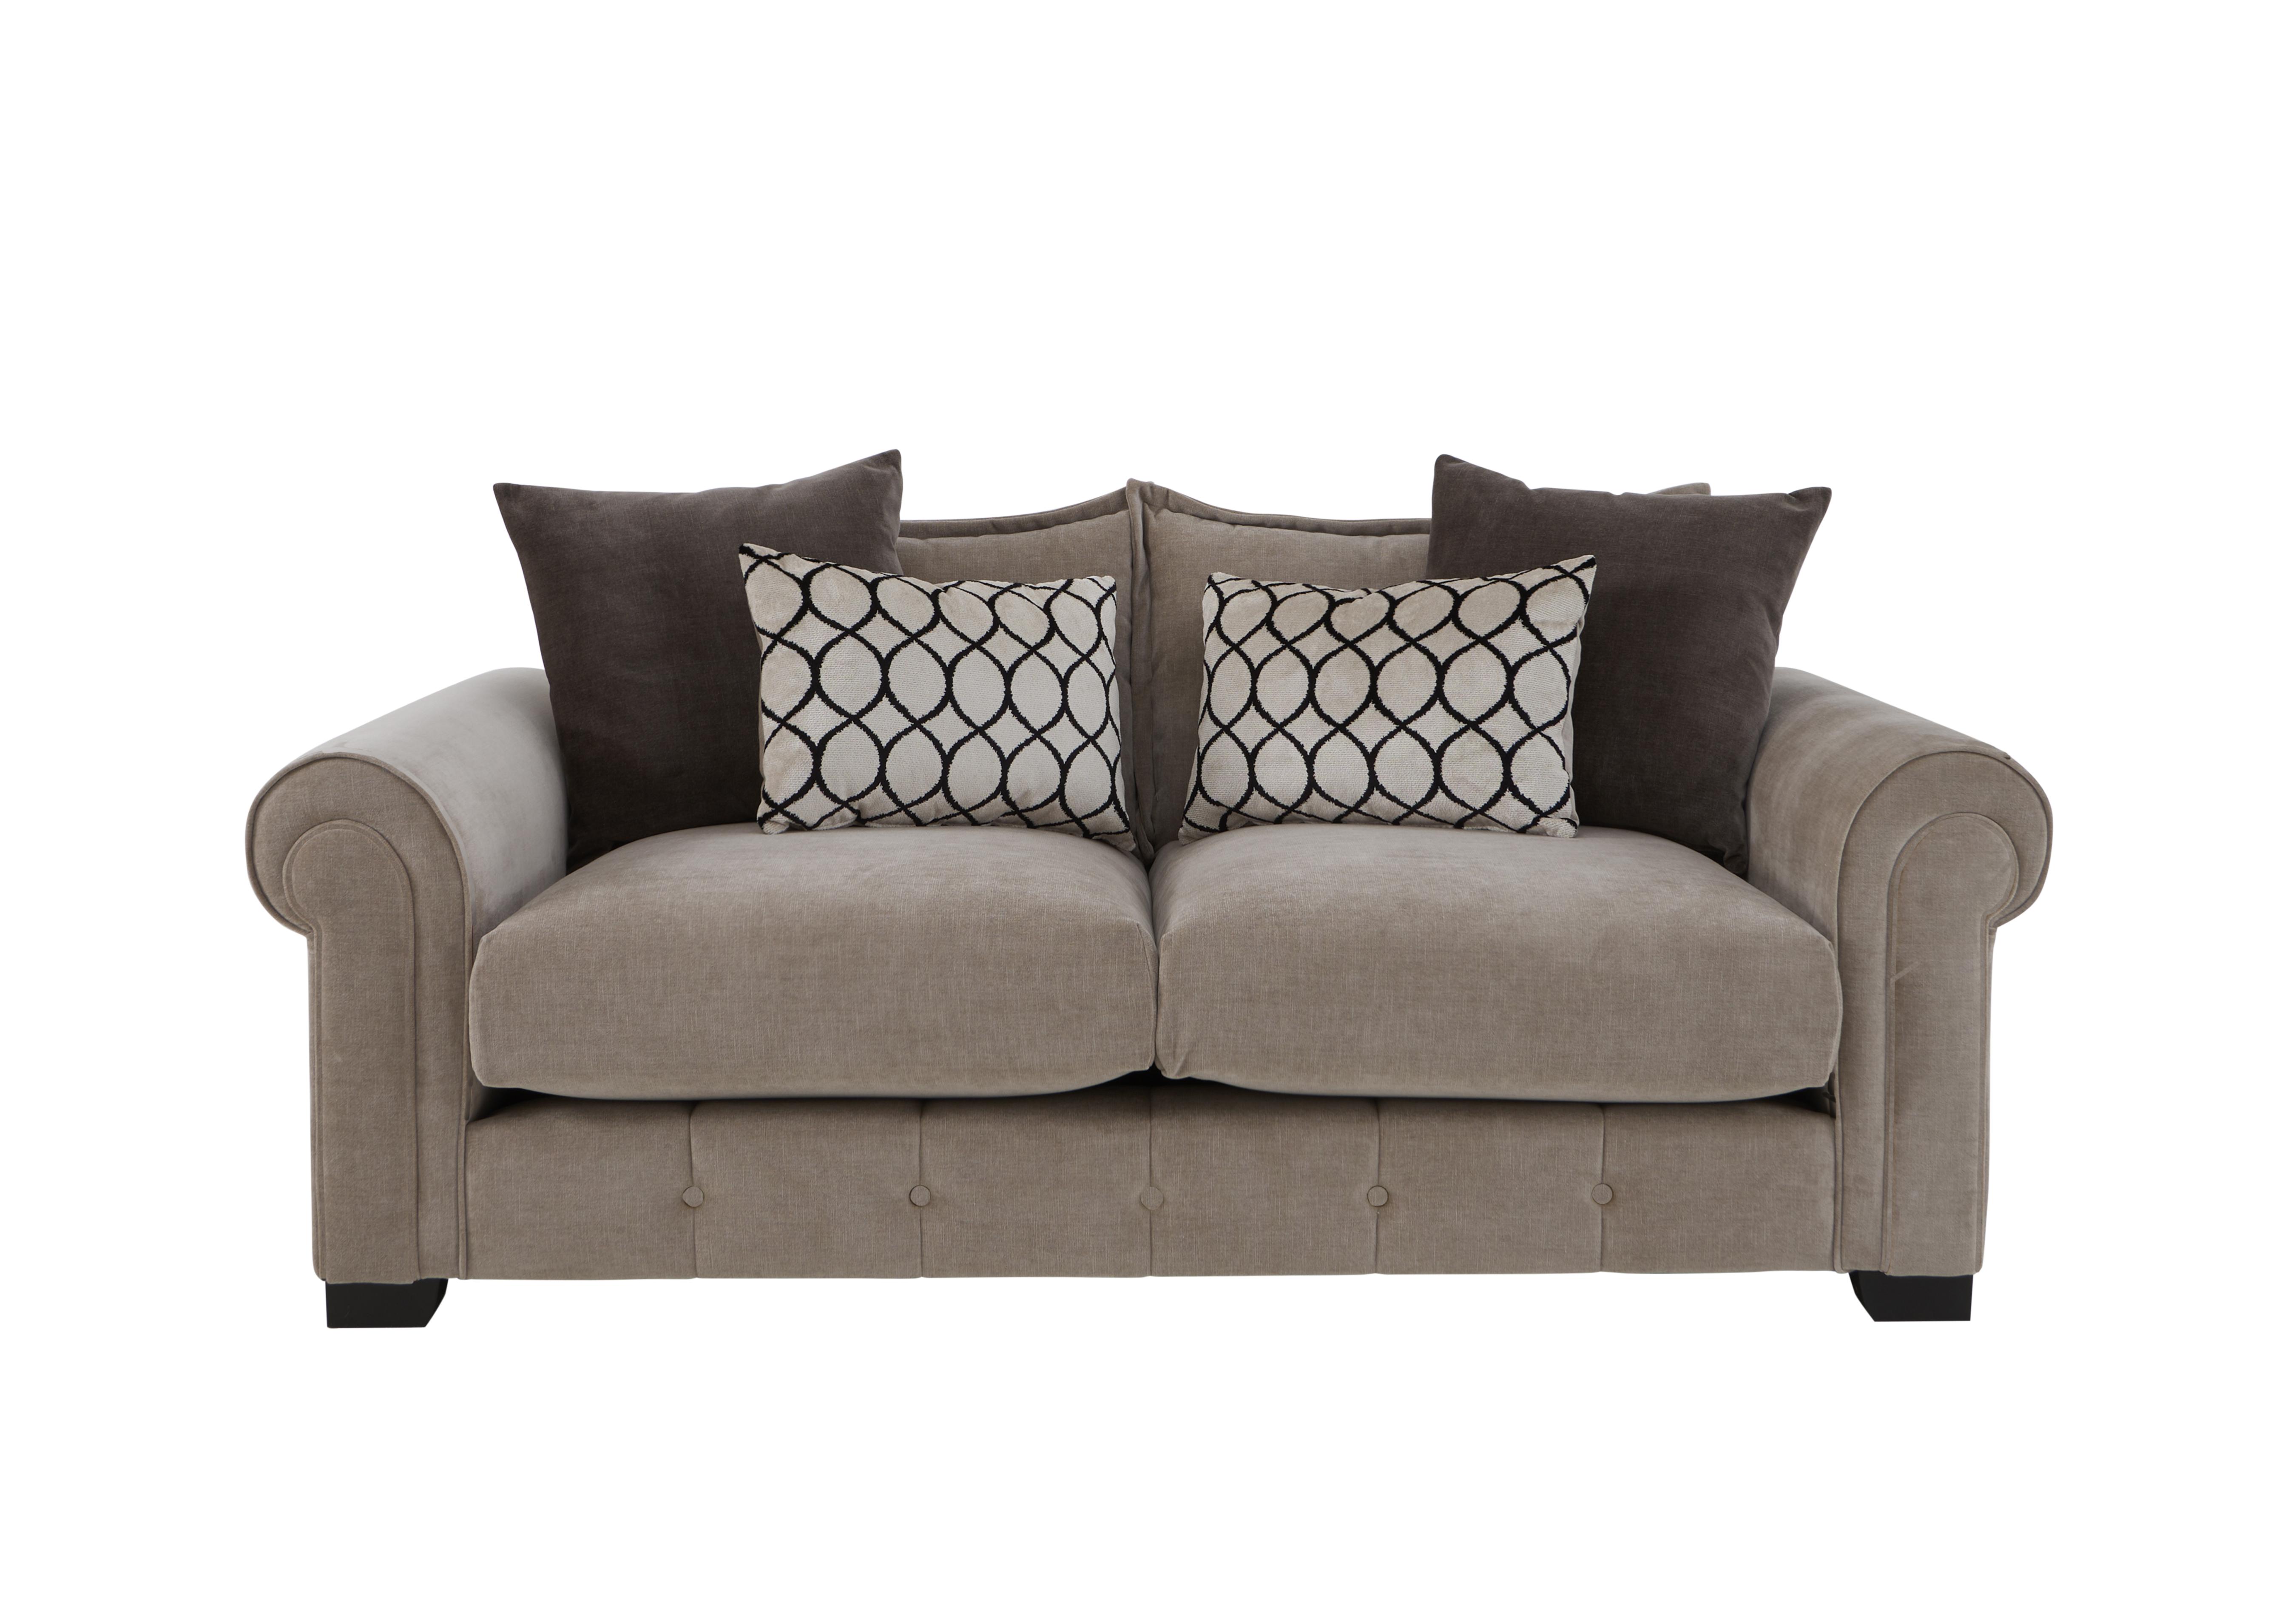 Sumptuous 3 Seater Fabric Sofa in Chamonix Wicker Dk/Self on Furniture Village